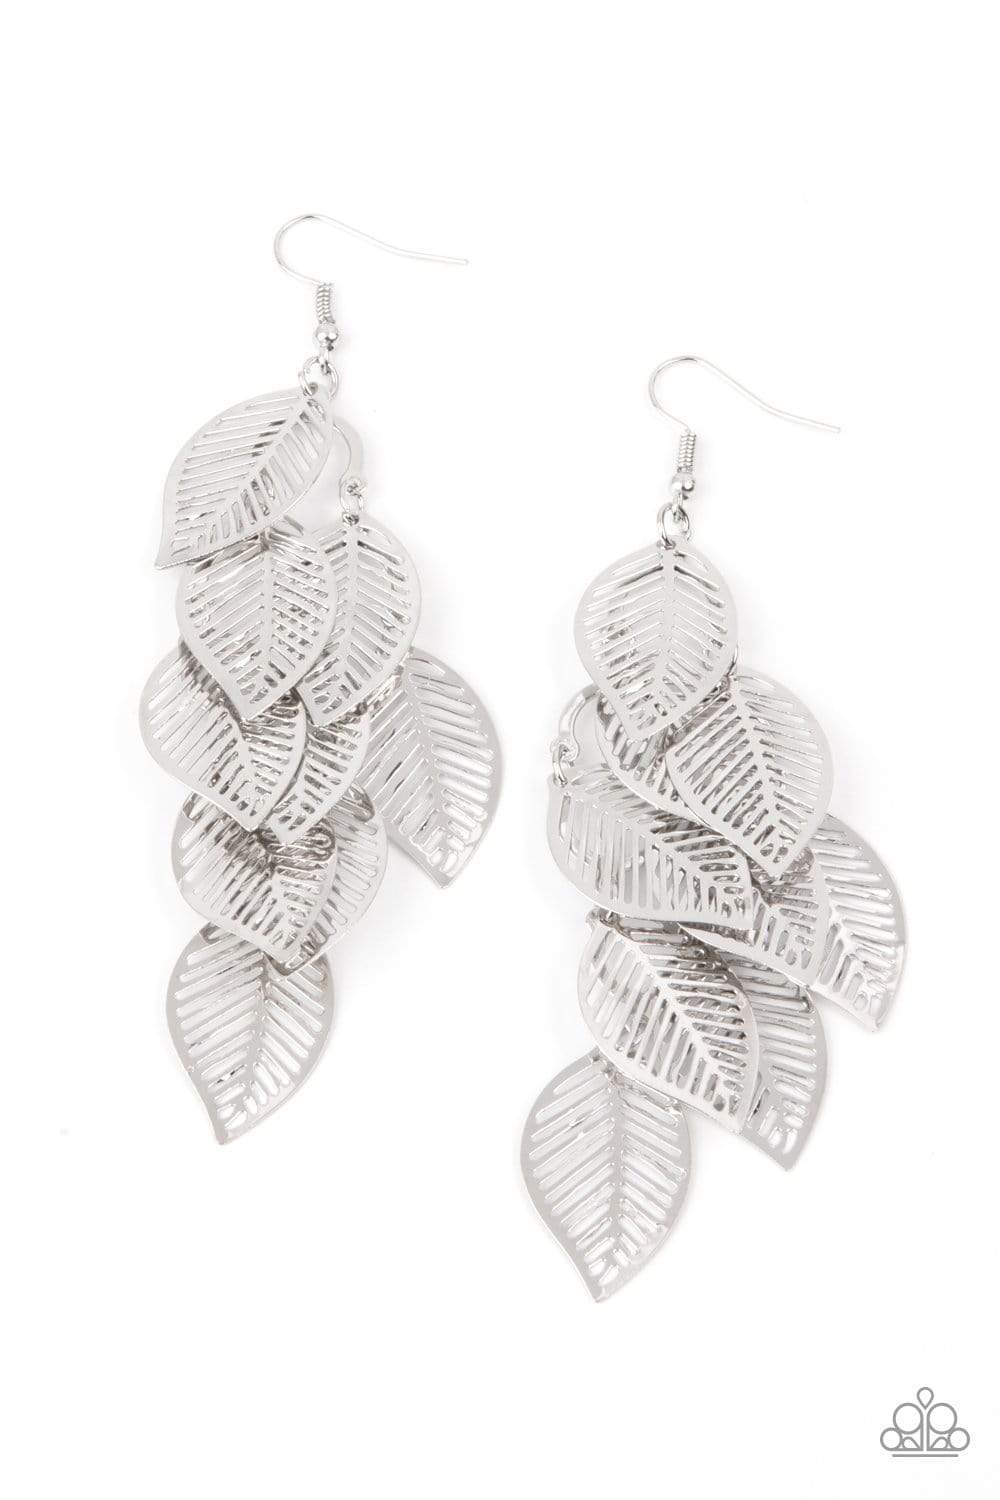 Limitlessly Leafy - Silver Jewelry